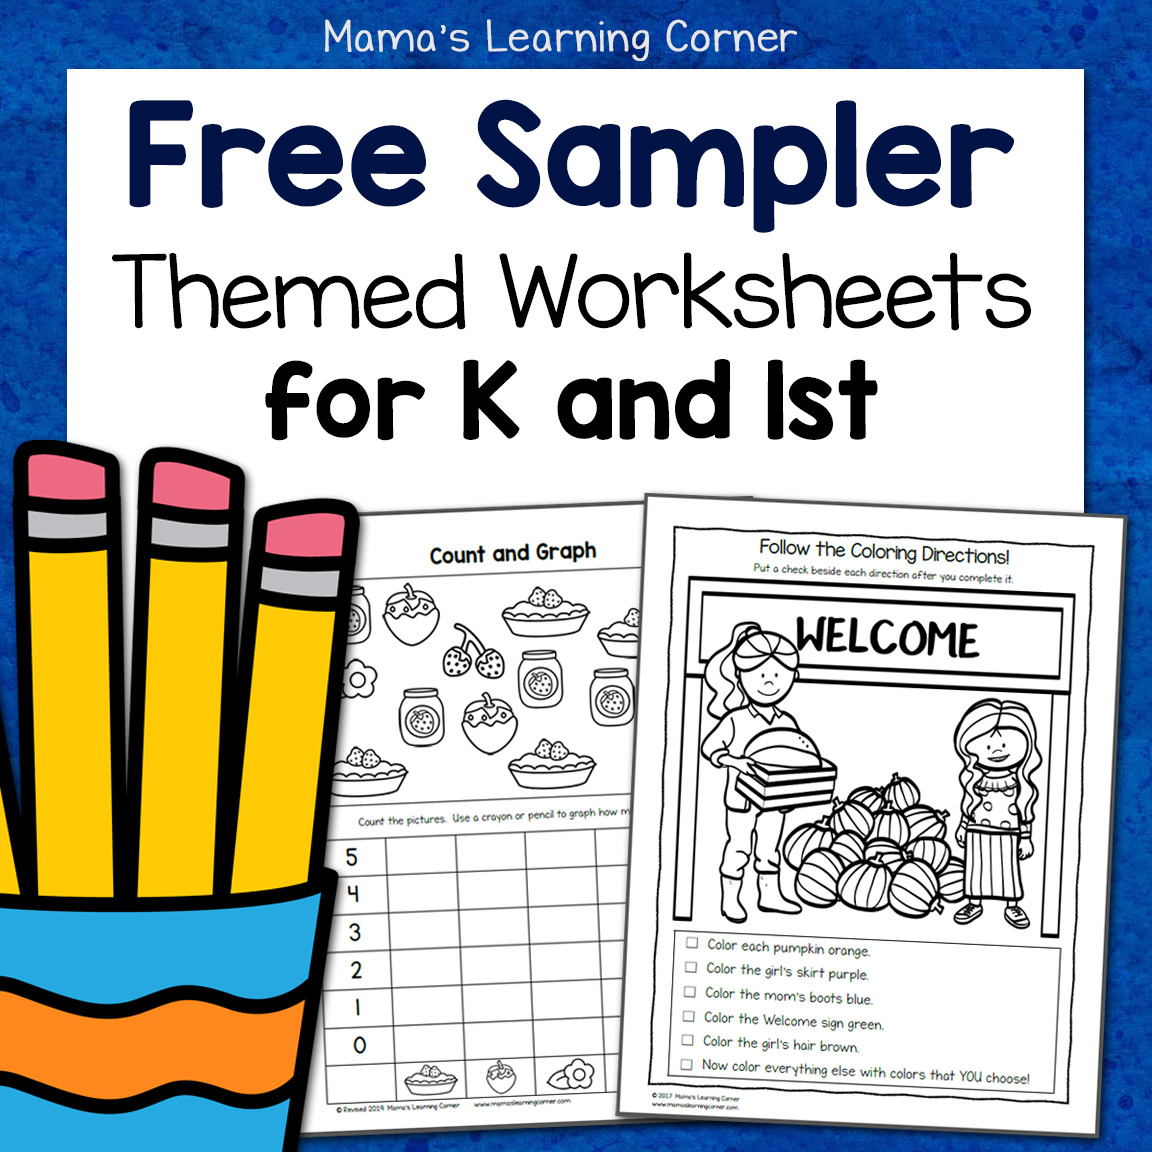 Free Kindergarten and First Grade Worksheet Sampler Packet - Mamas With Regard To Following Directions Worksheet Kindergarten